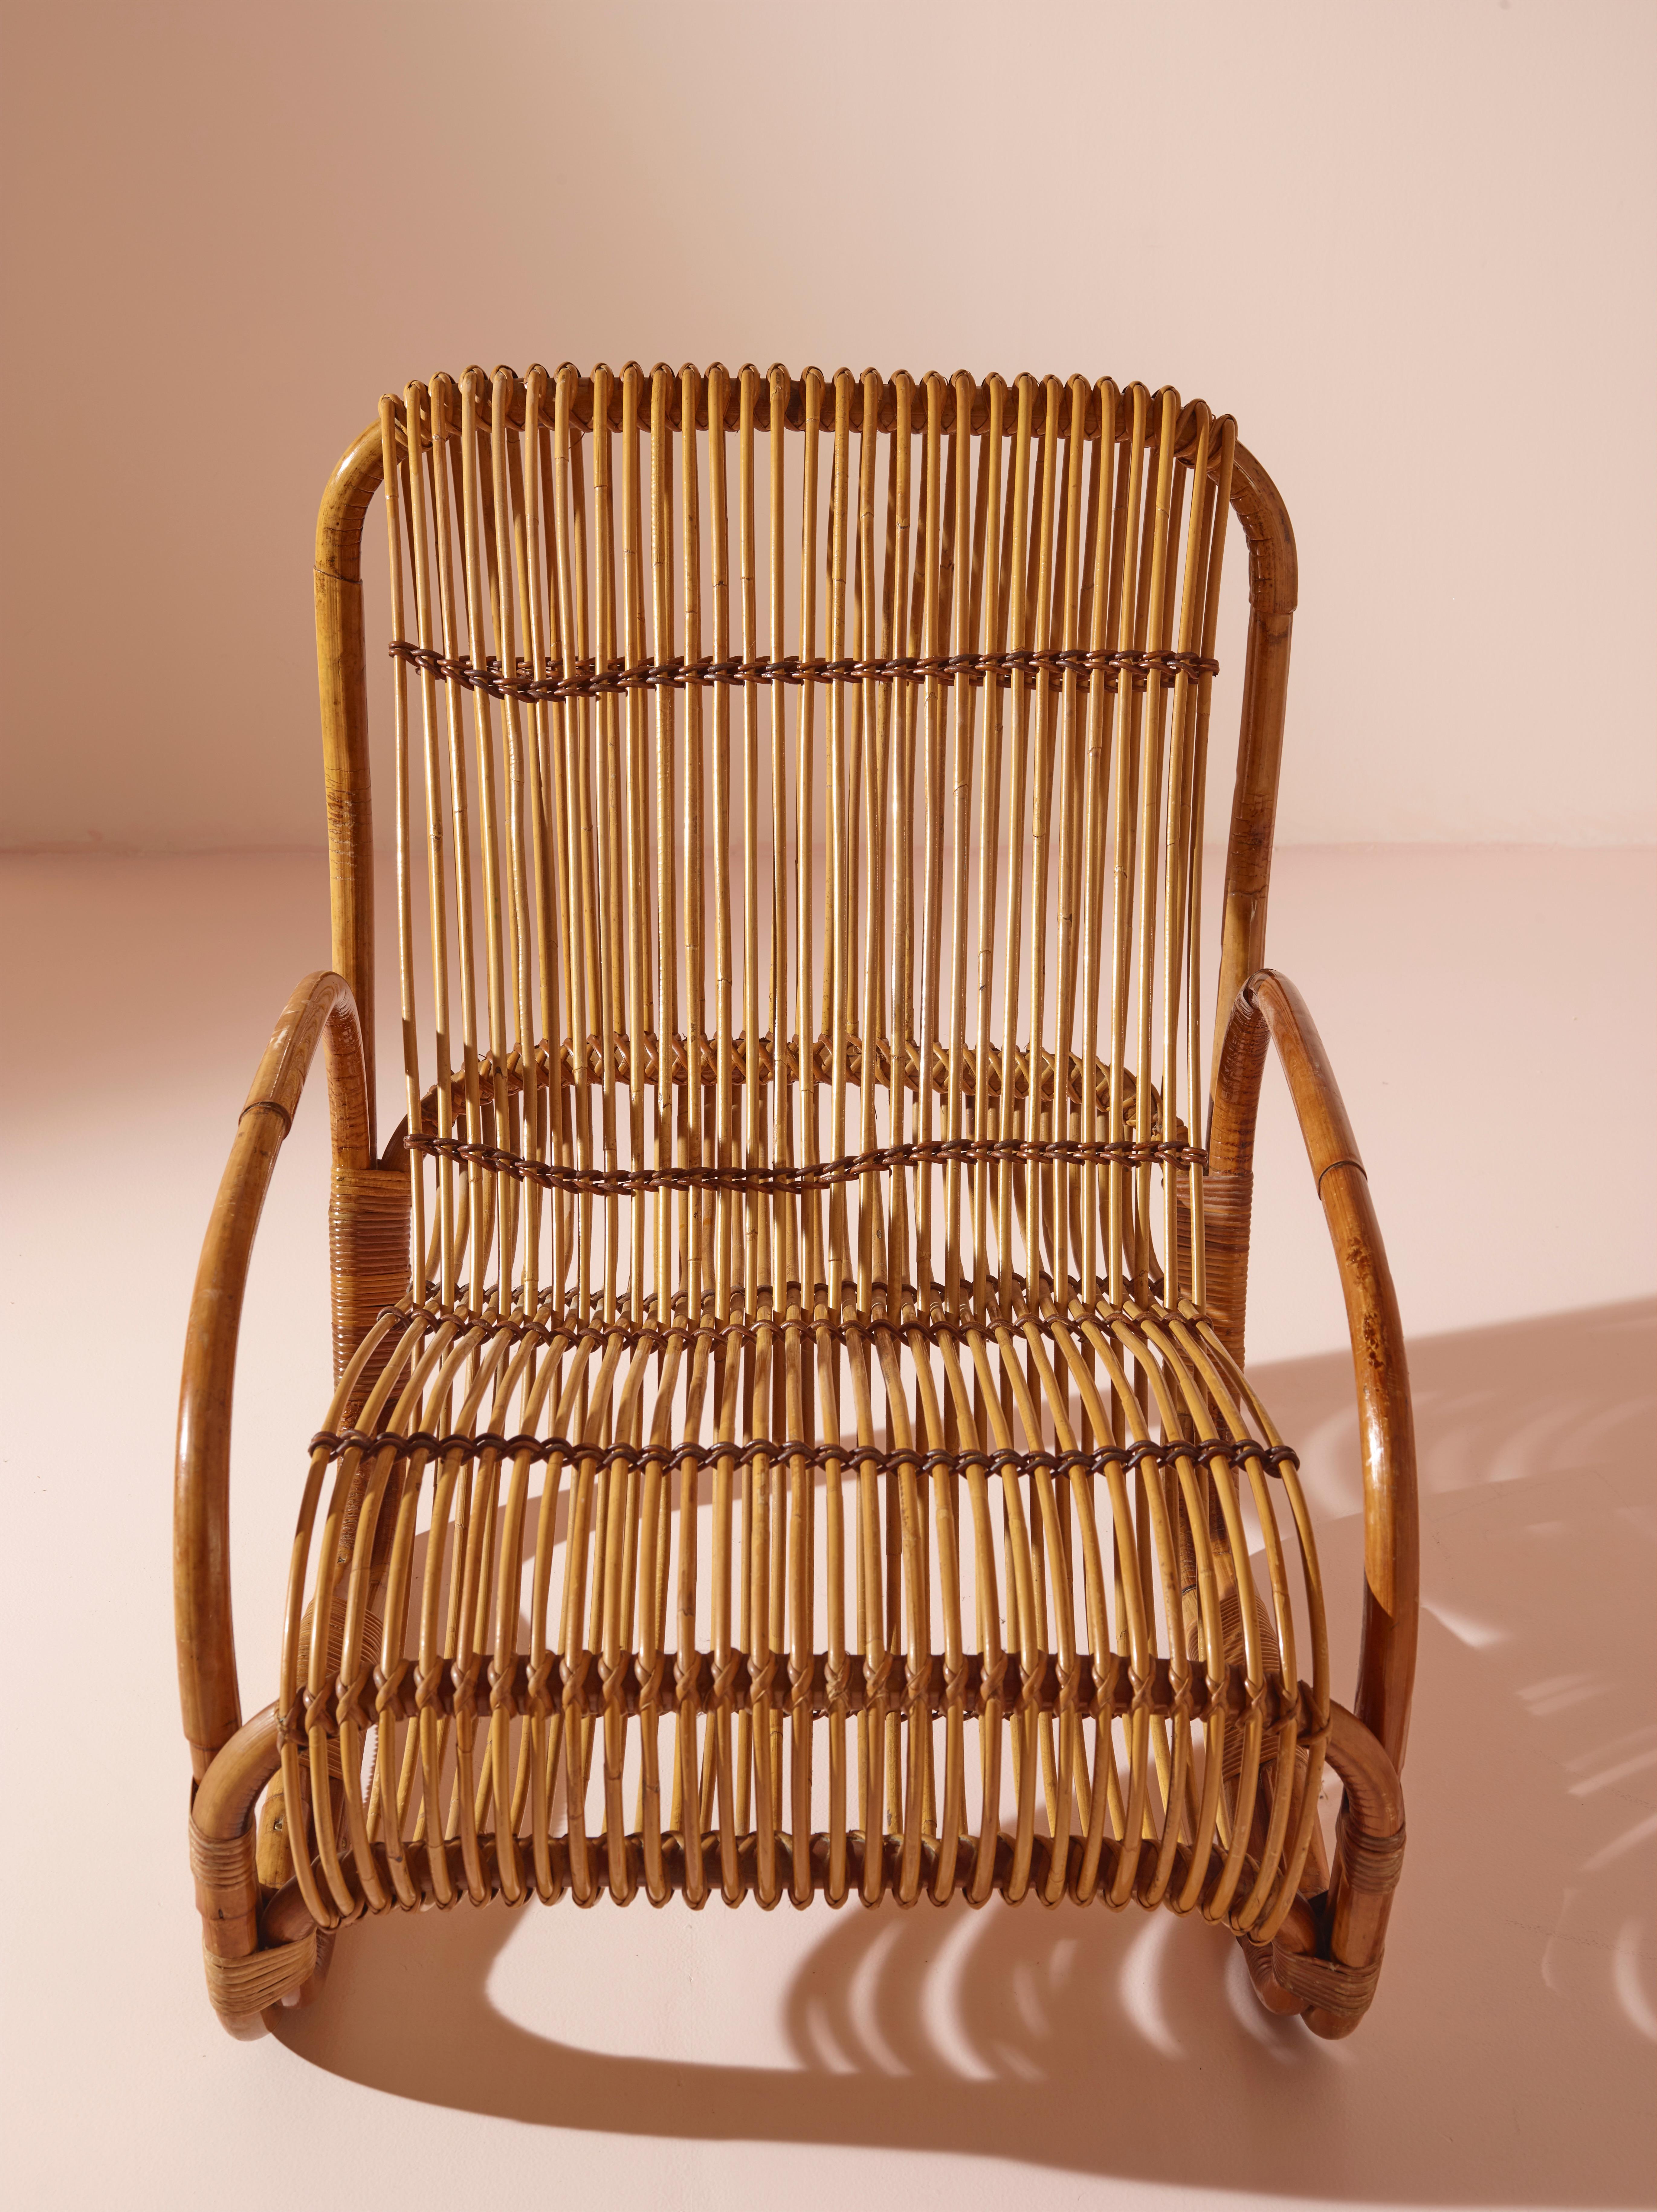 Mid-20th Century Raffaella Crespi attributed bamboo lounge chair, Italy, 1960s